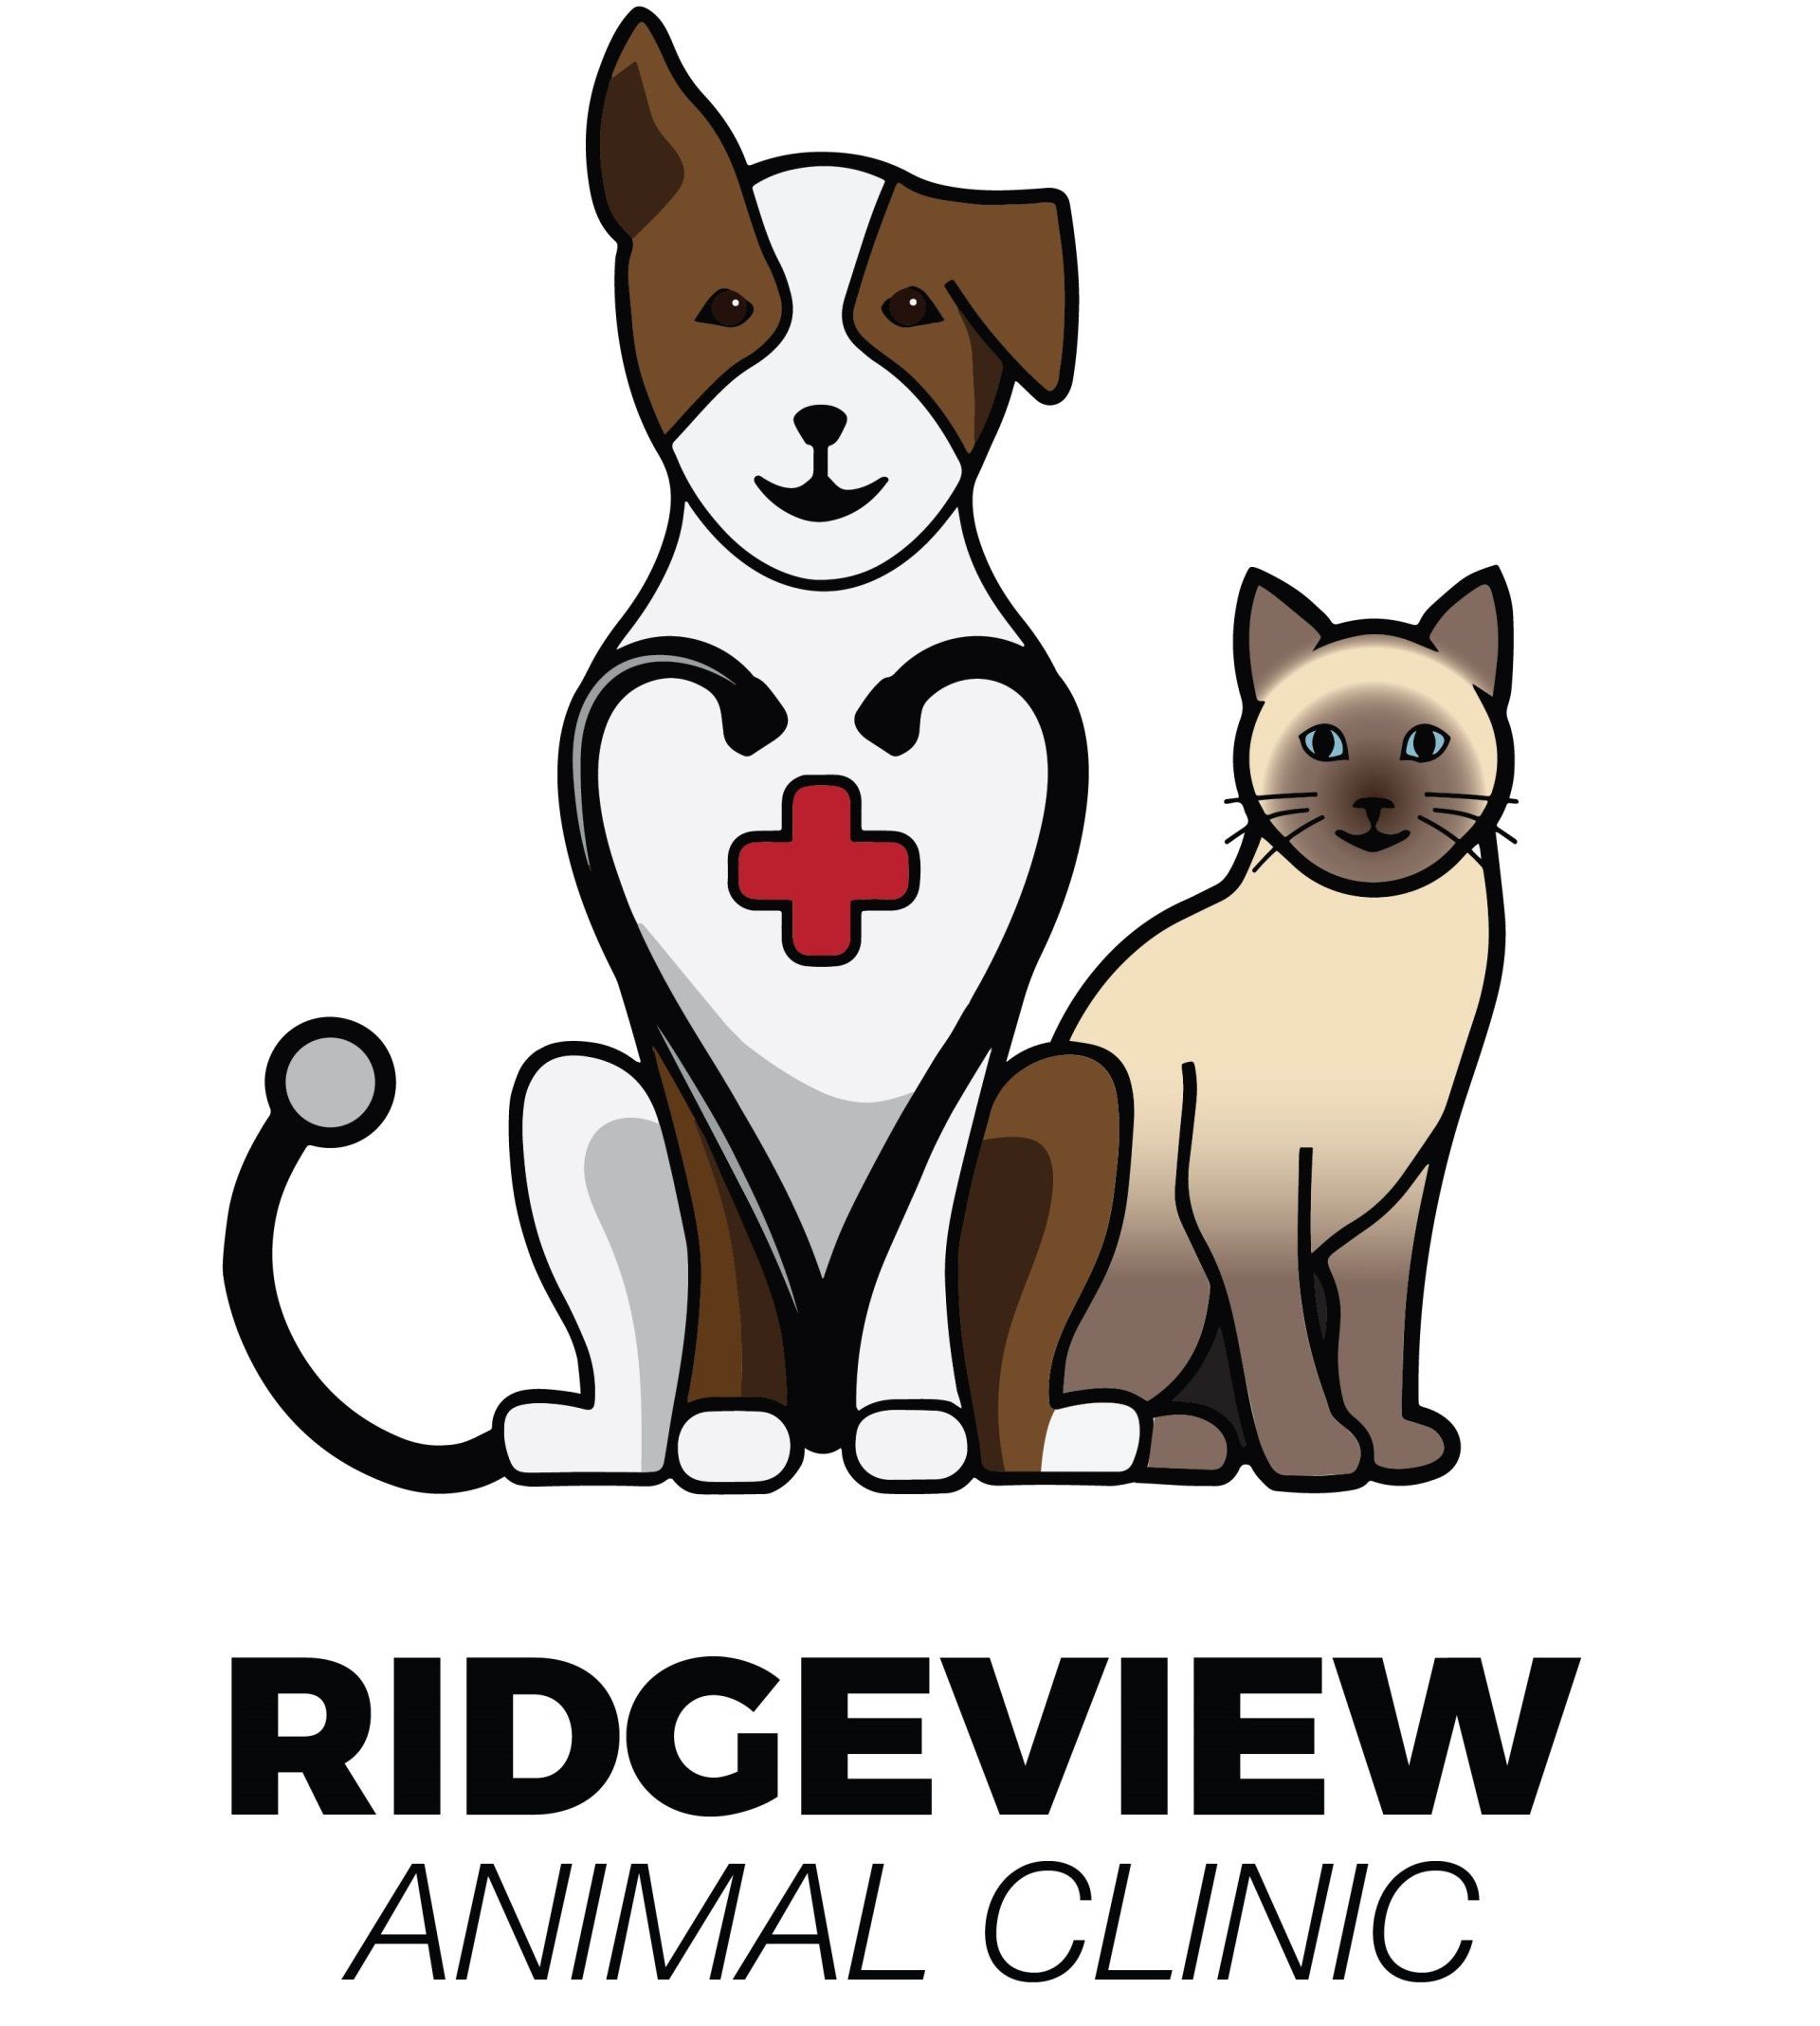 Ridgeview Animal Clinic | Veterinarians | New Albany, IN